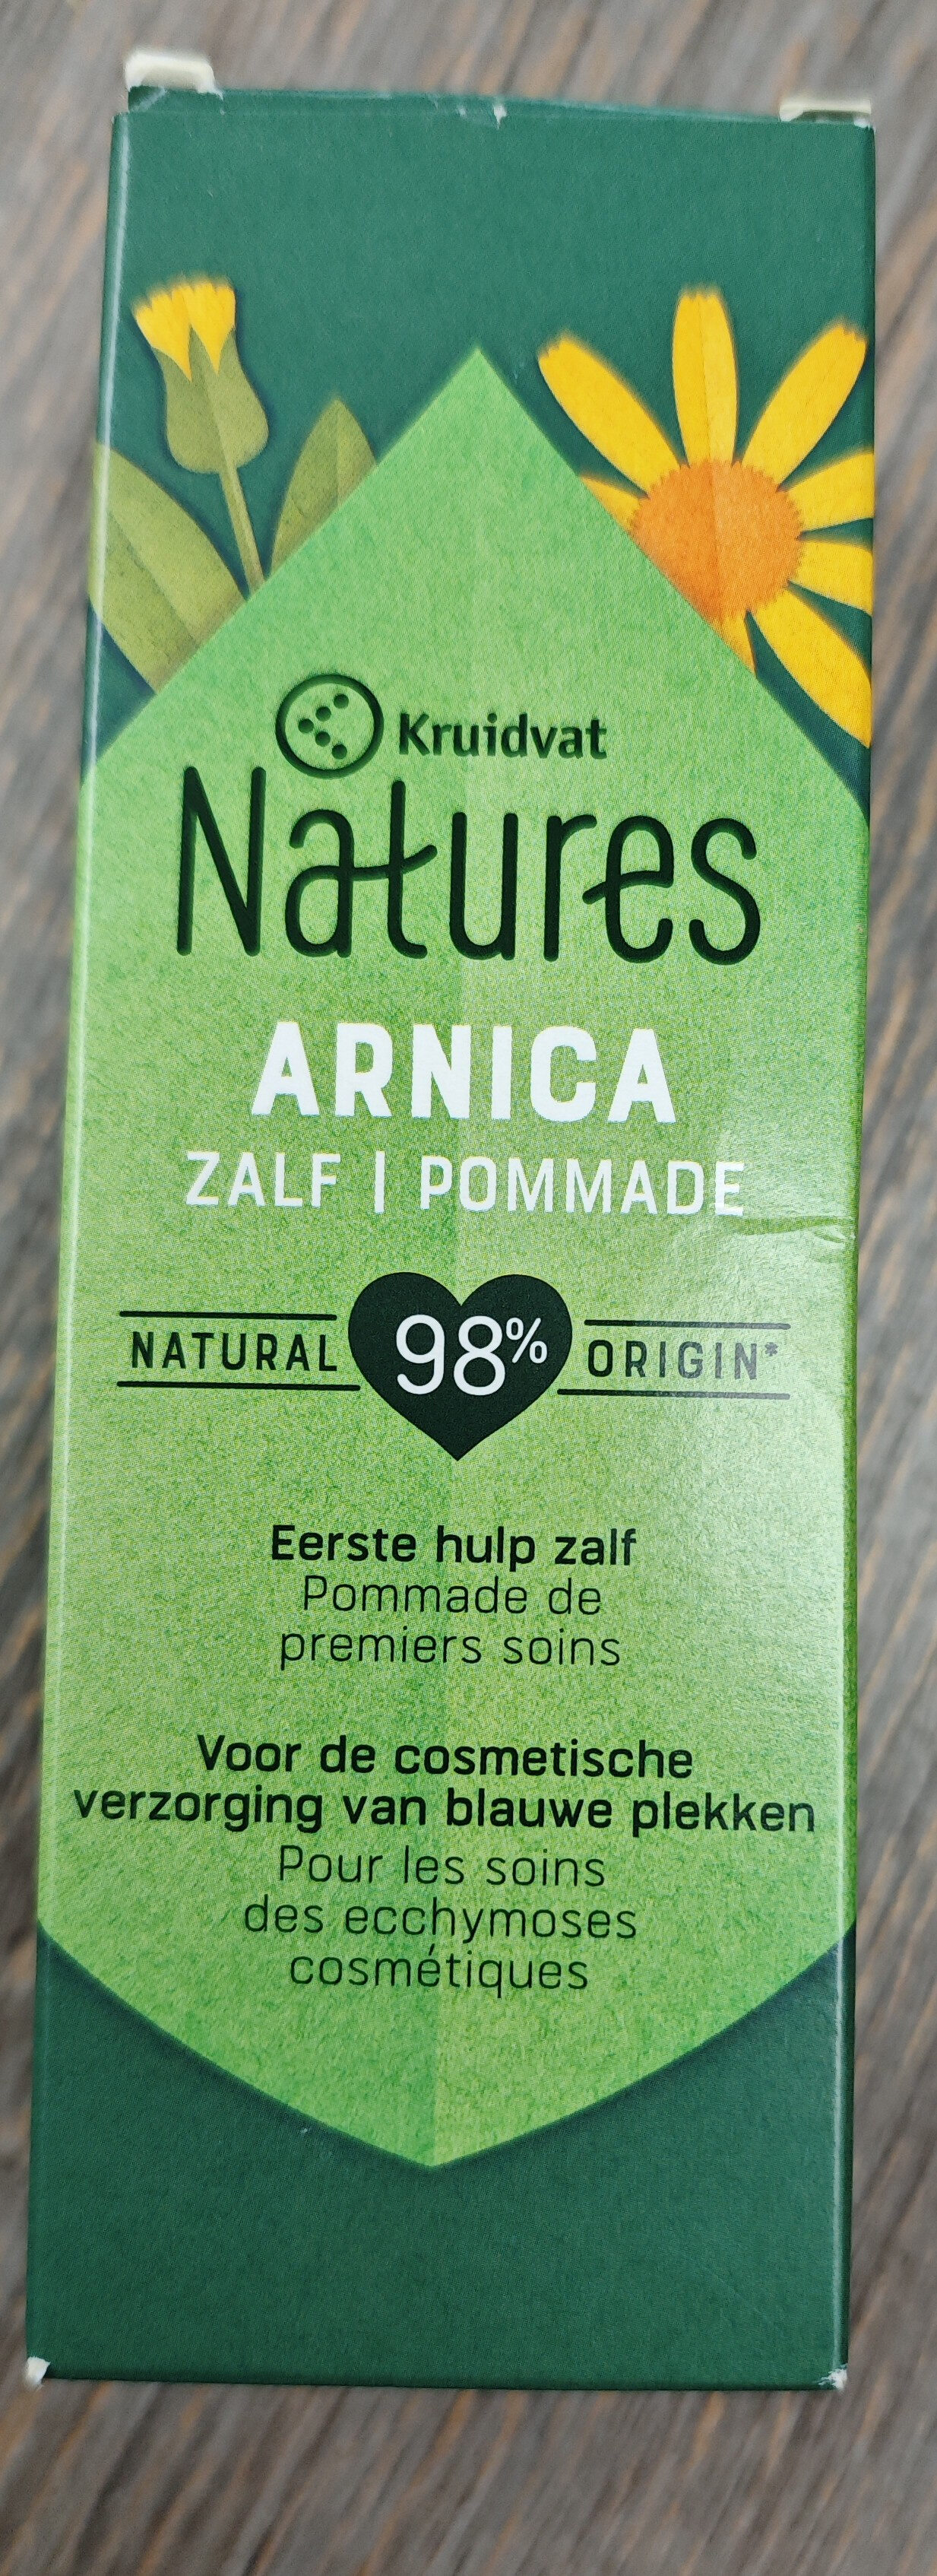 Kruidvat Natures Arnica - Product - fr